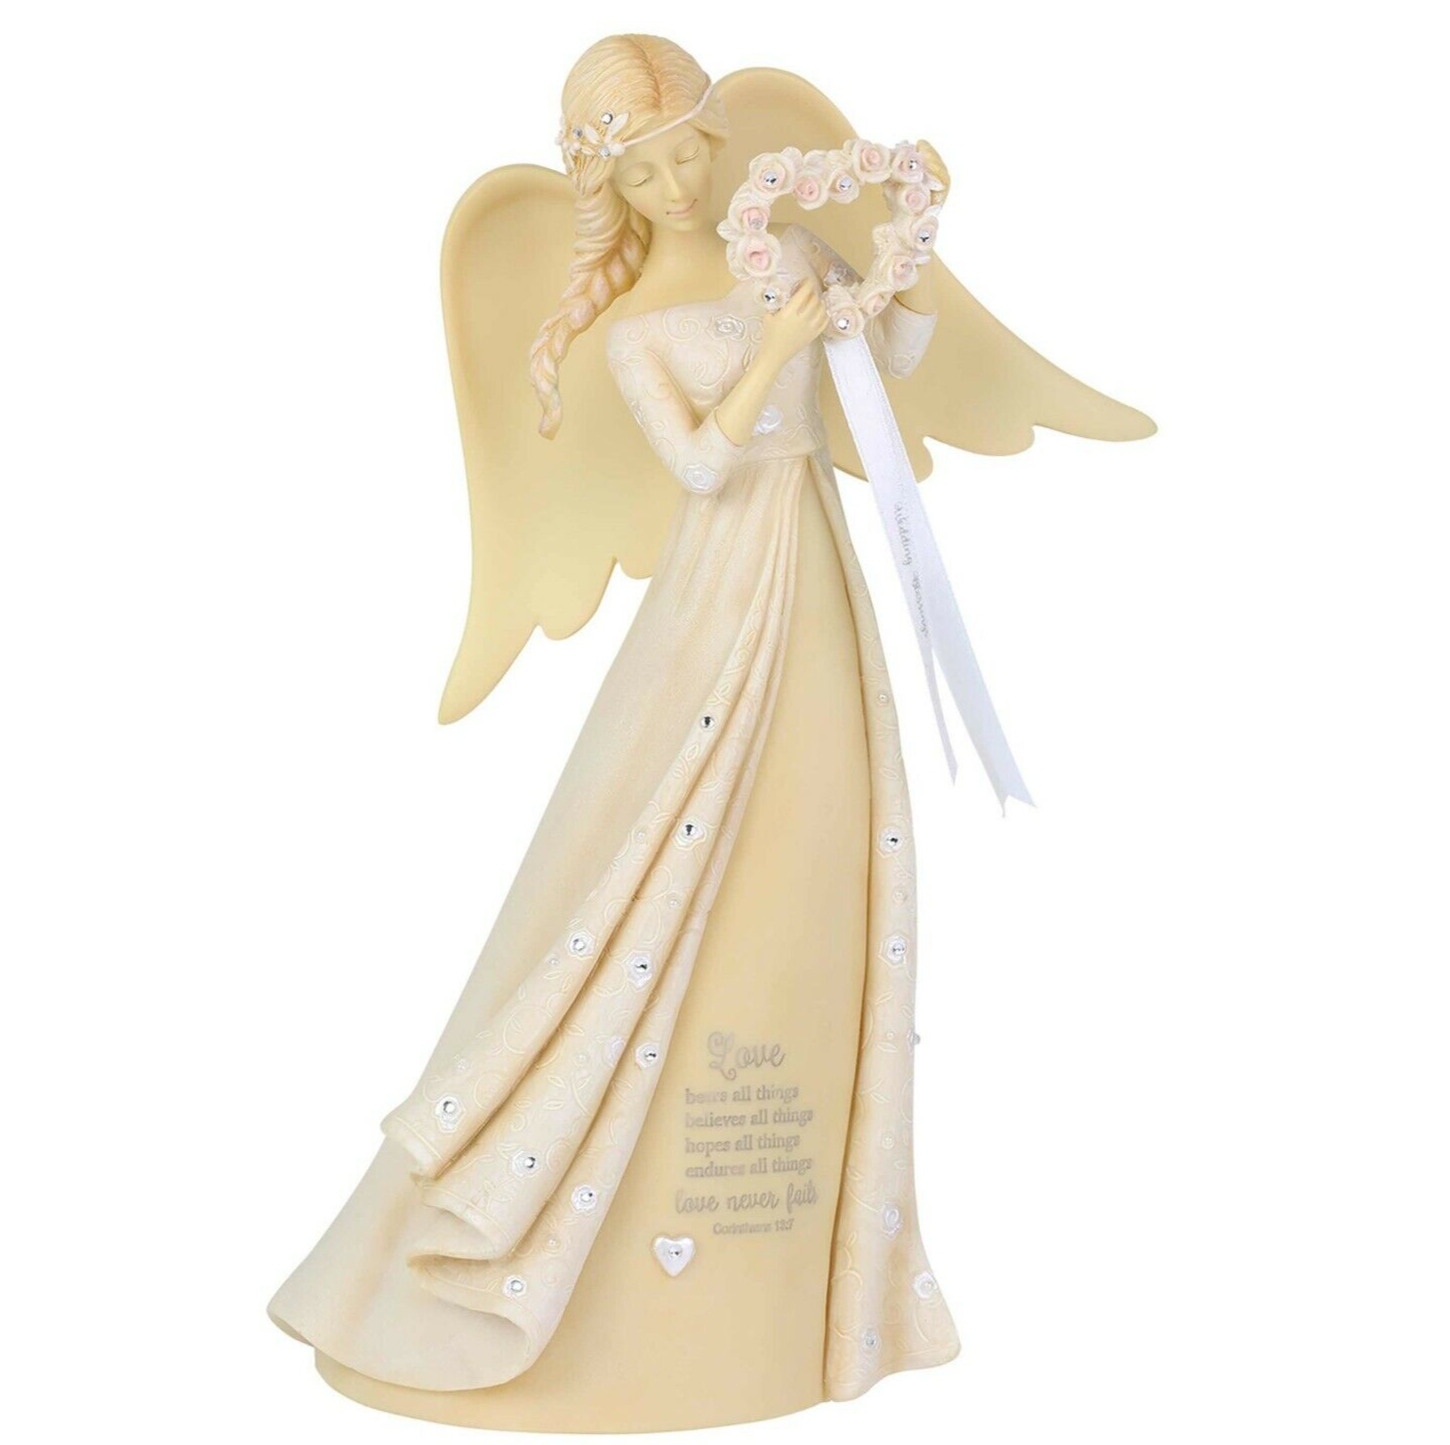 ✿ New FOUNDATIONS Figurine WEDDING ANGEL Statue Crystal FLOWER HEART WREATH Gown